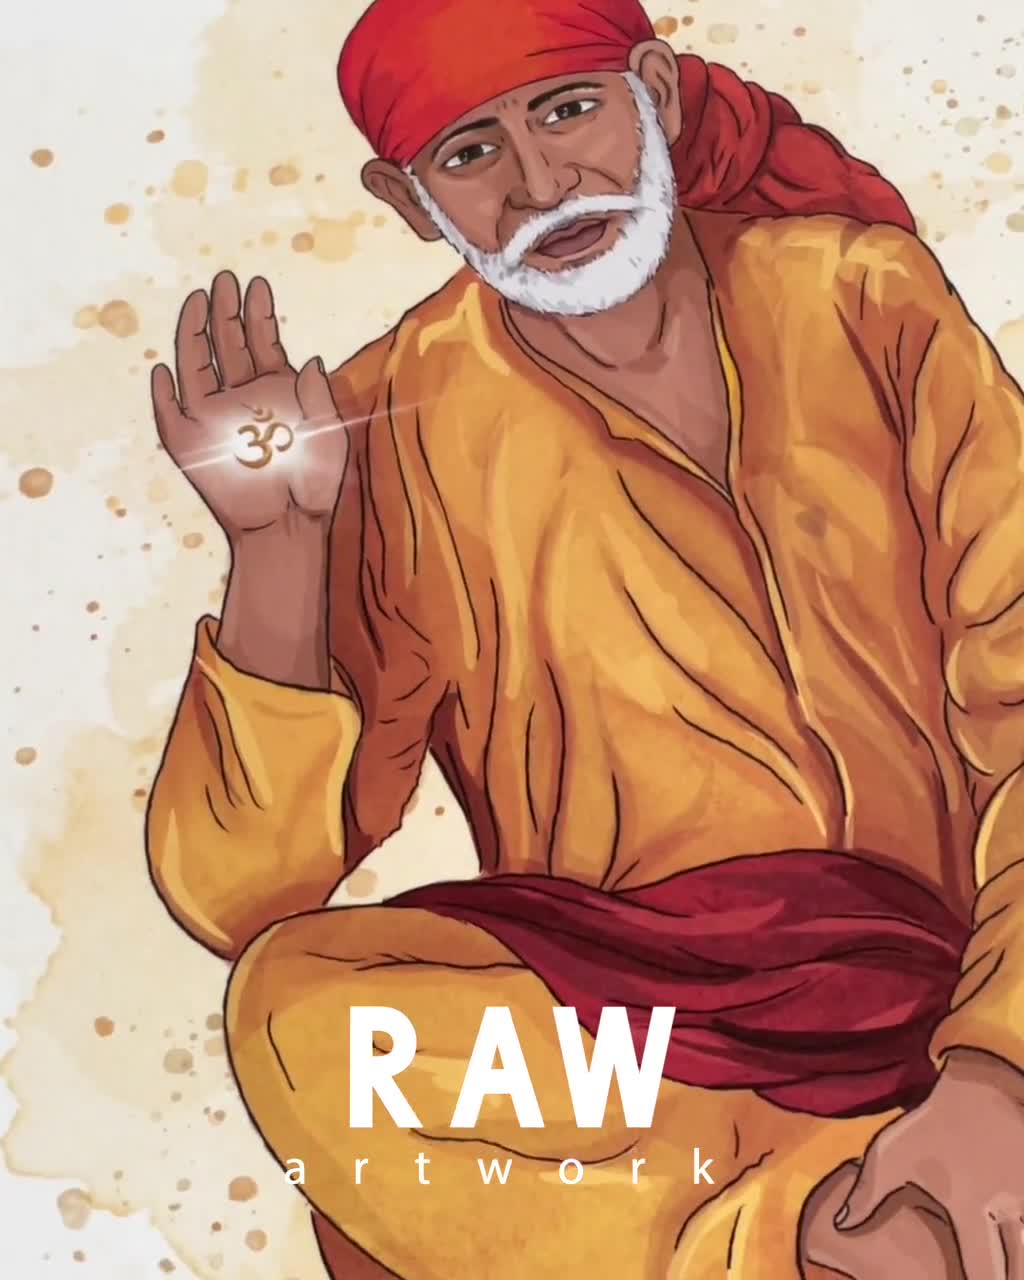 Sketch of Kaliyug Indian God Shirdi Sai Baba Outline Editable Illustration  Stock Vector - Illustration of outline, hinduism: 221381916